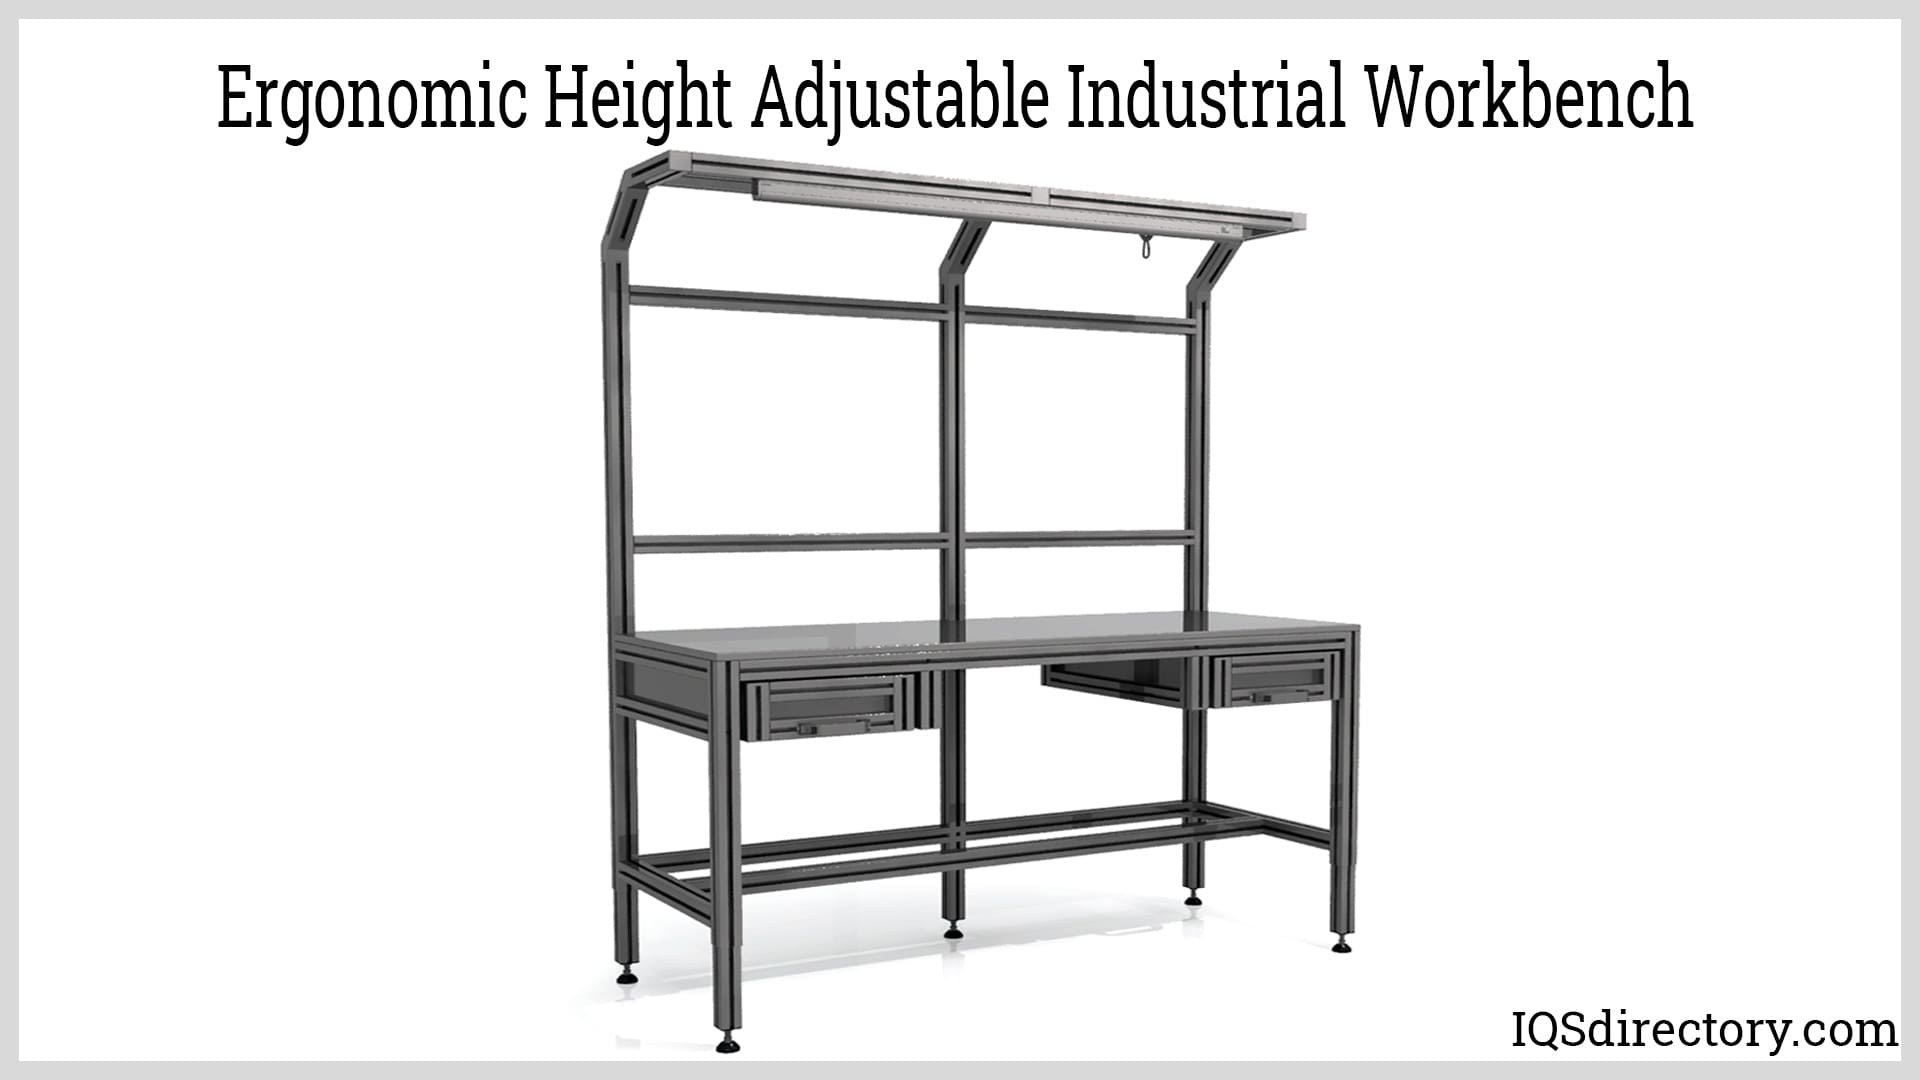 Ergonomic Height Adjustable Industrial Workbench